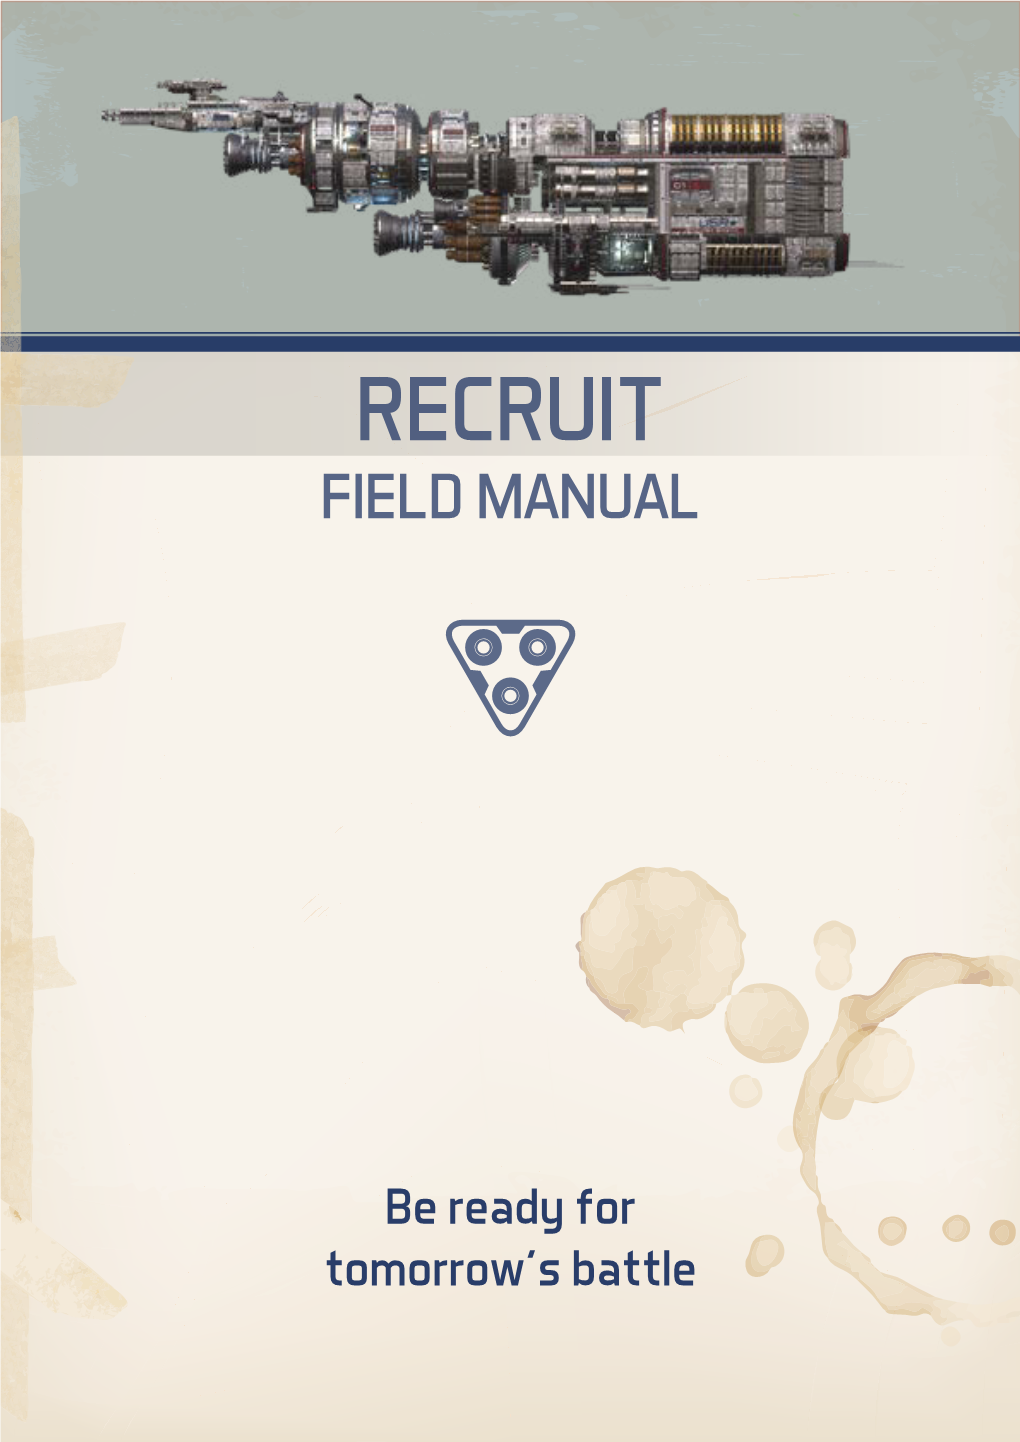 Recruit Field Manual